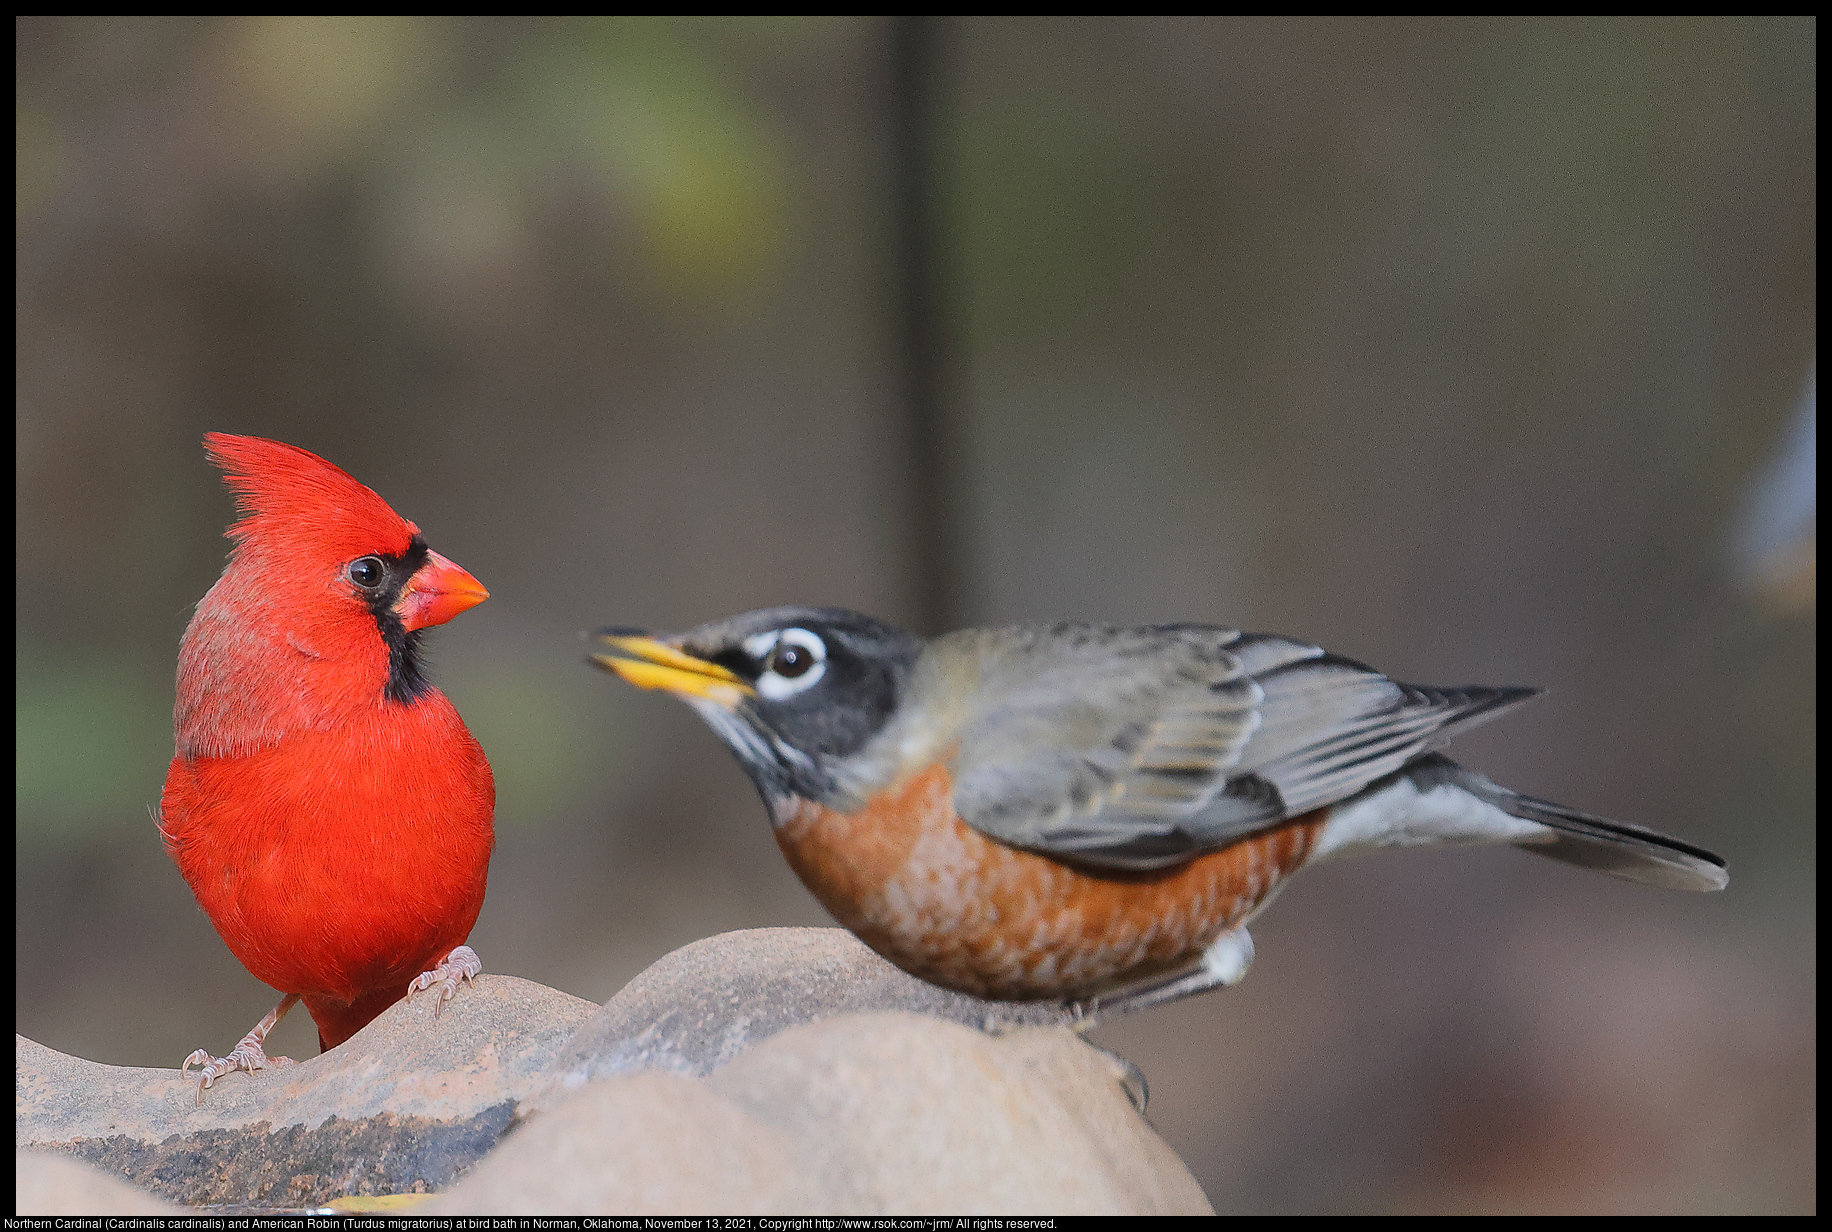 Northern Cardinal (Cardinalis cardinalis) and American Robin (Turdus migratorius) at bird bath in Norman, Oklahoma, November 13, 2021